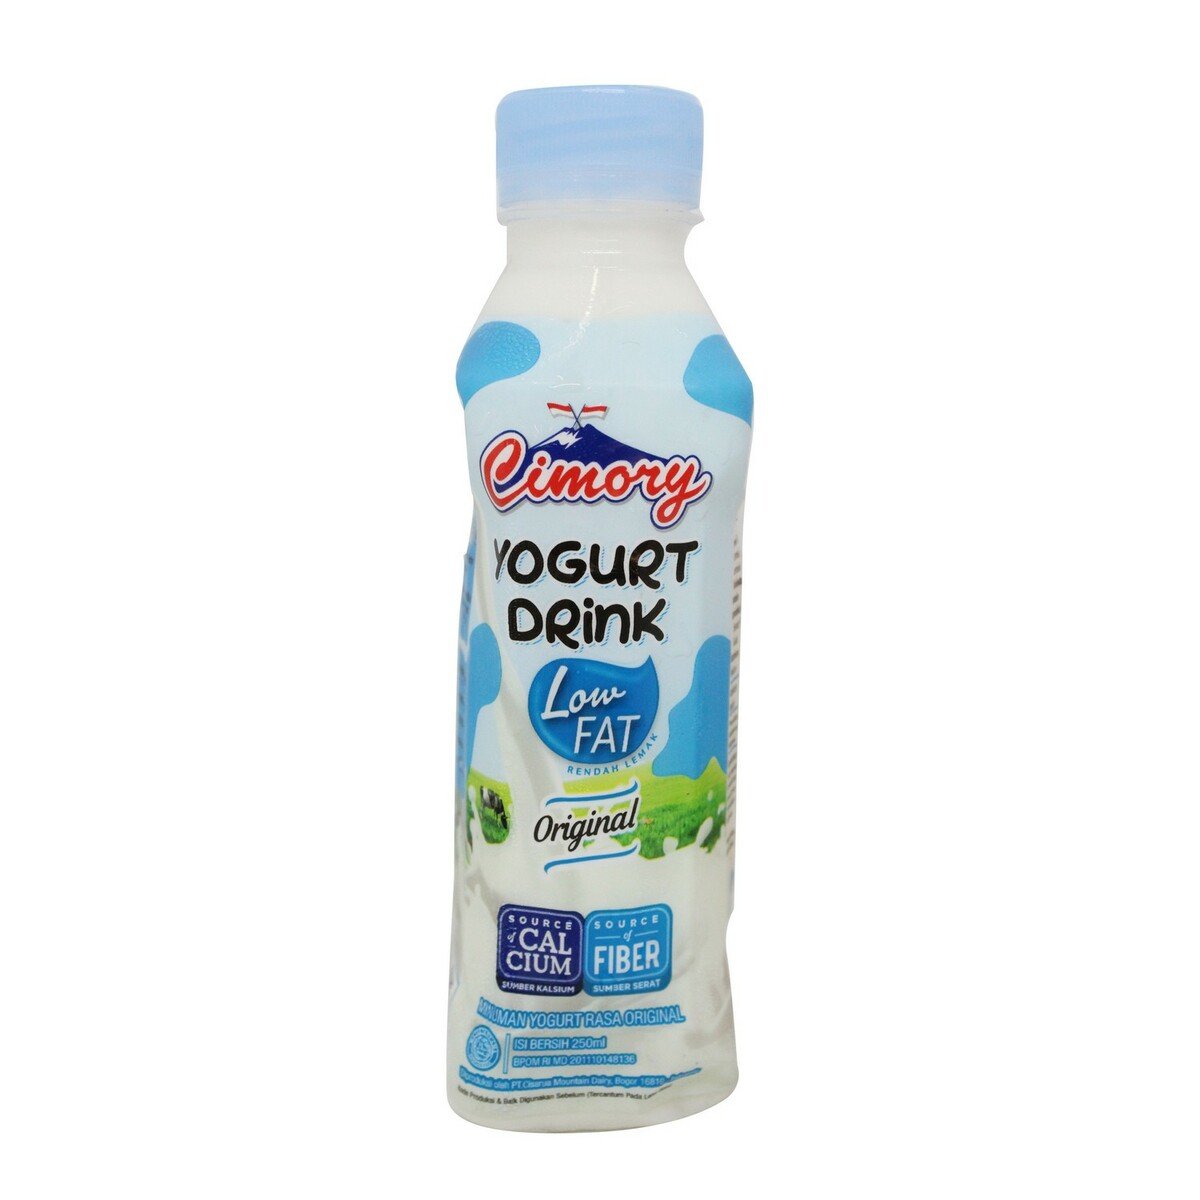 Cimory Yogurt Drink Fat Original 250ml